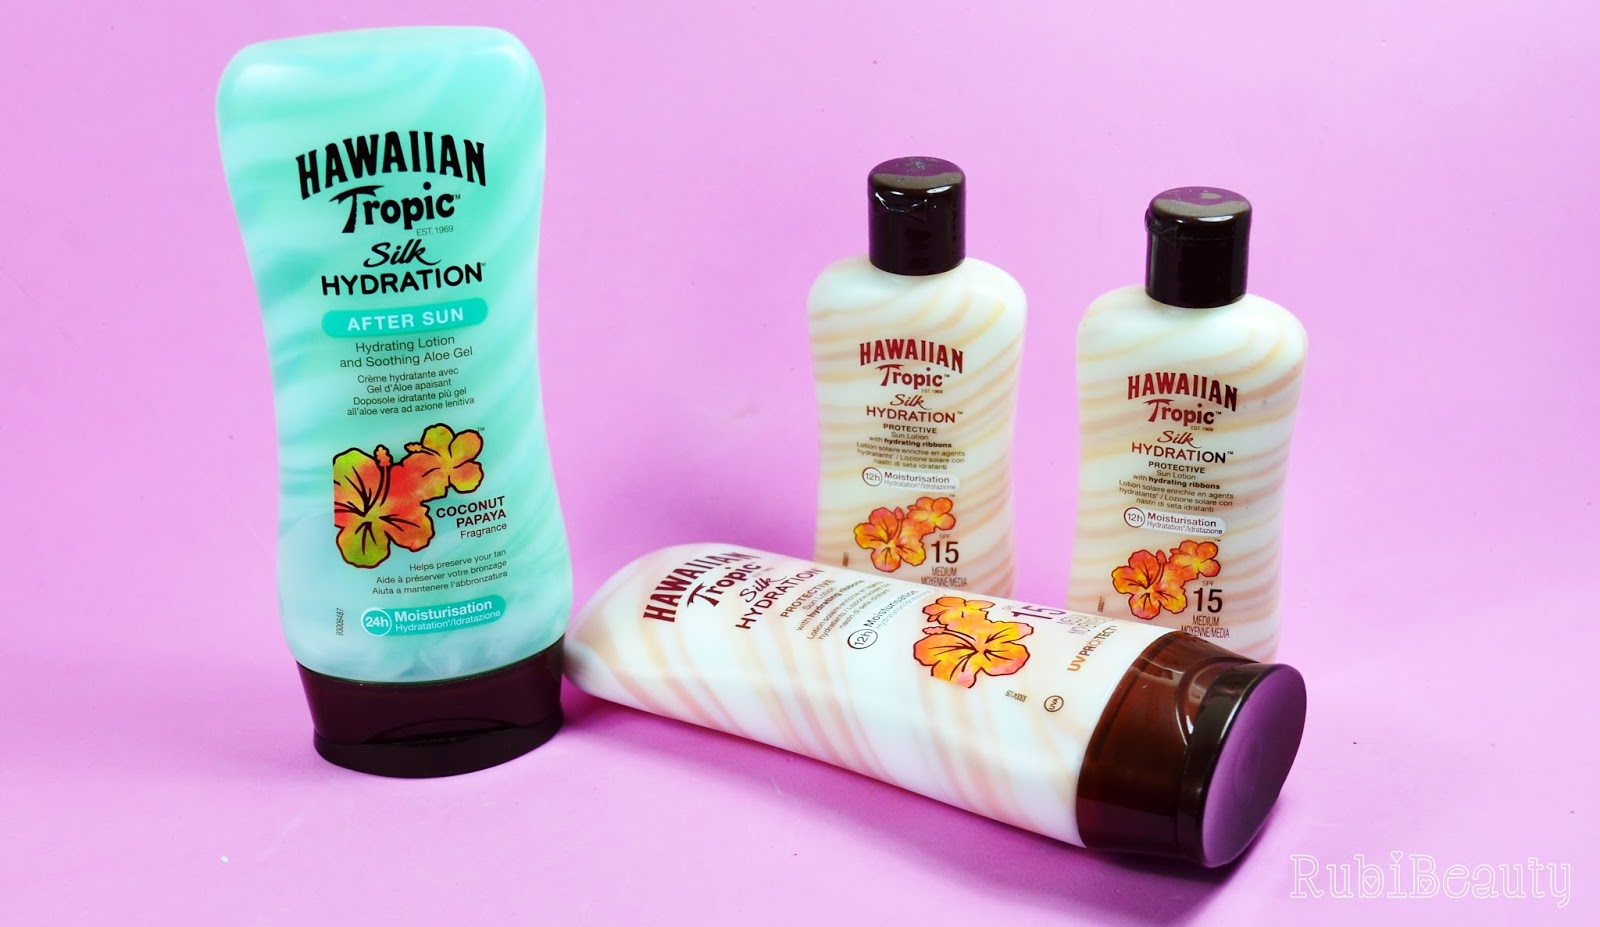 rubibeauty review hawaiian tropic silk hydration protector solar aftersun trnd